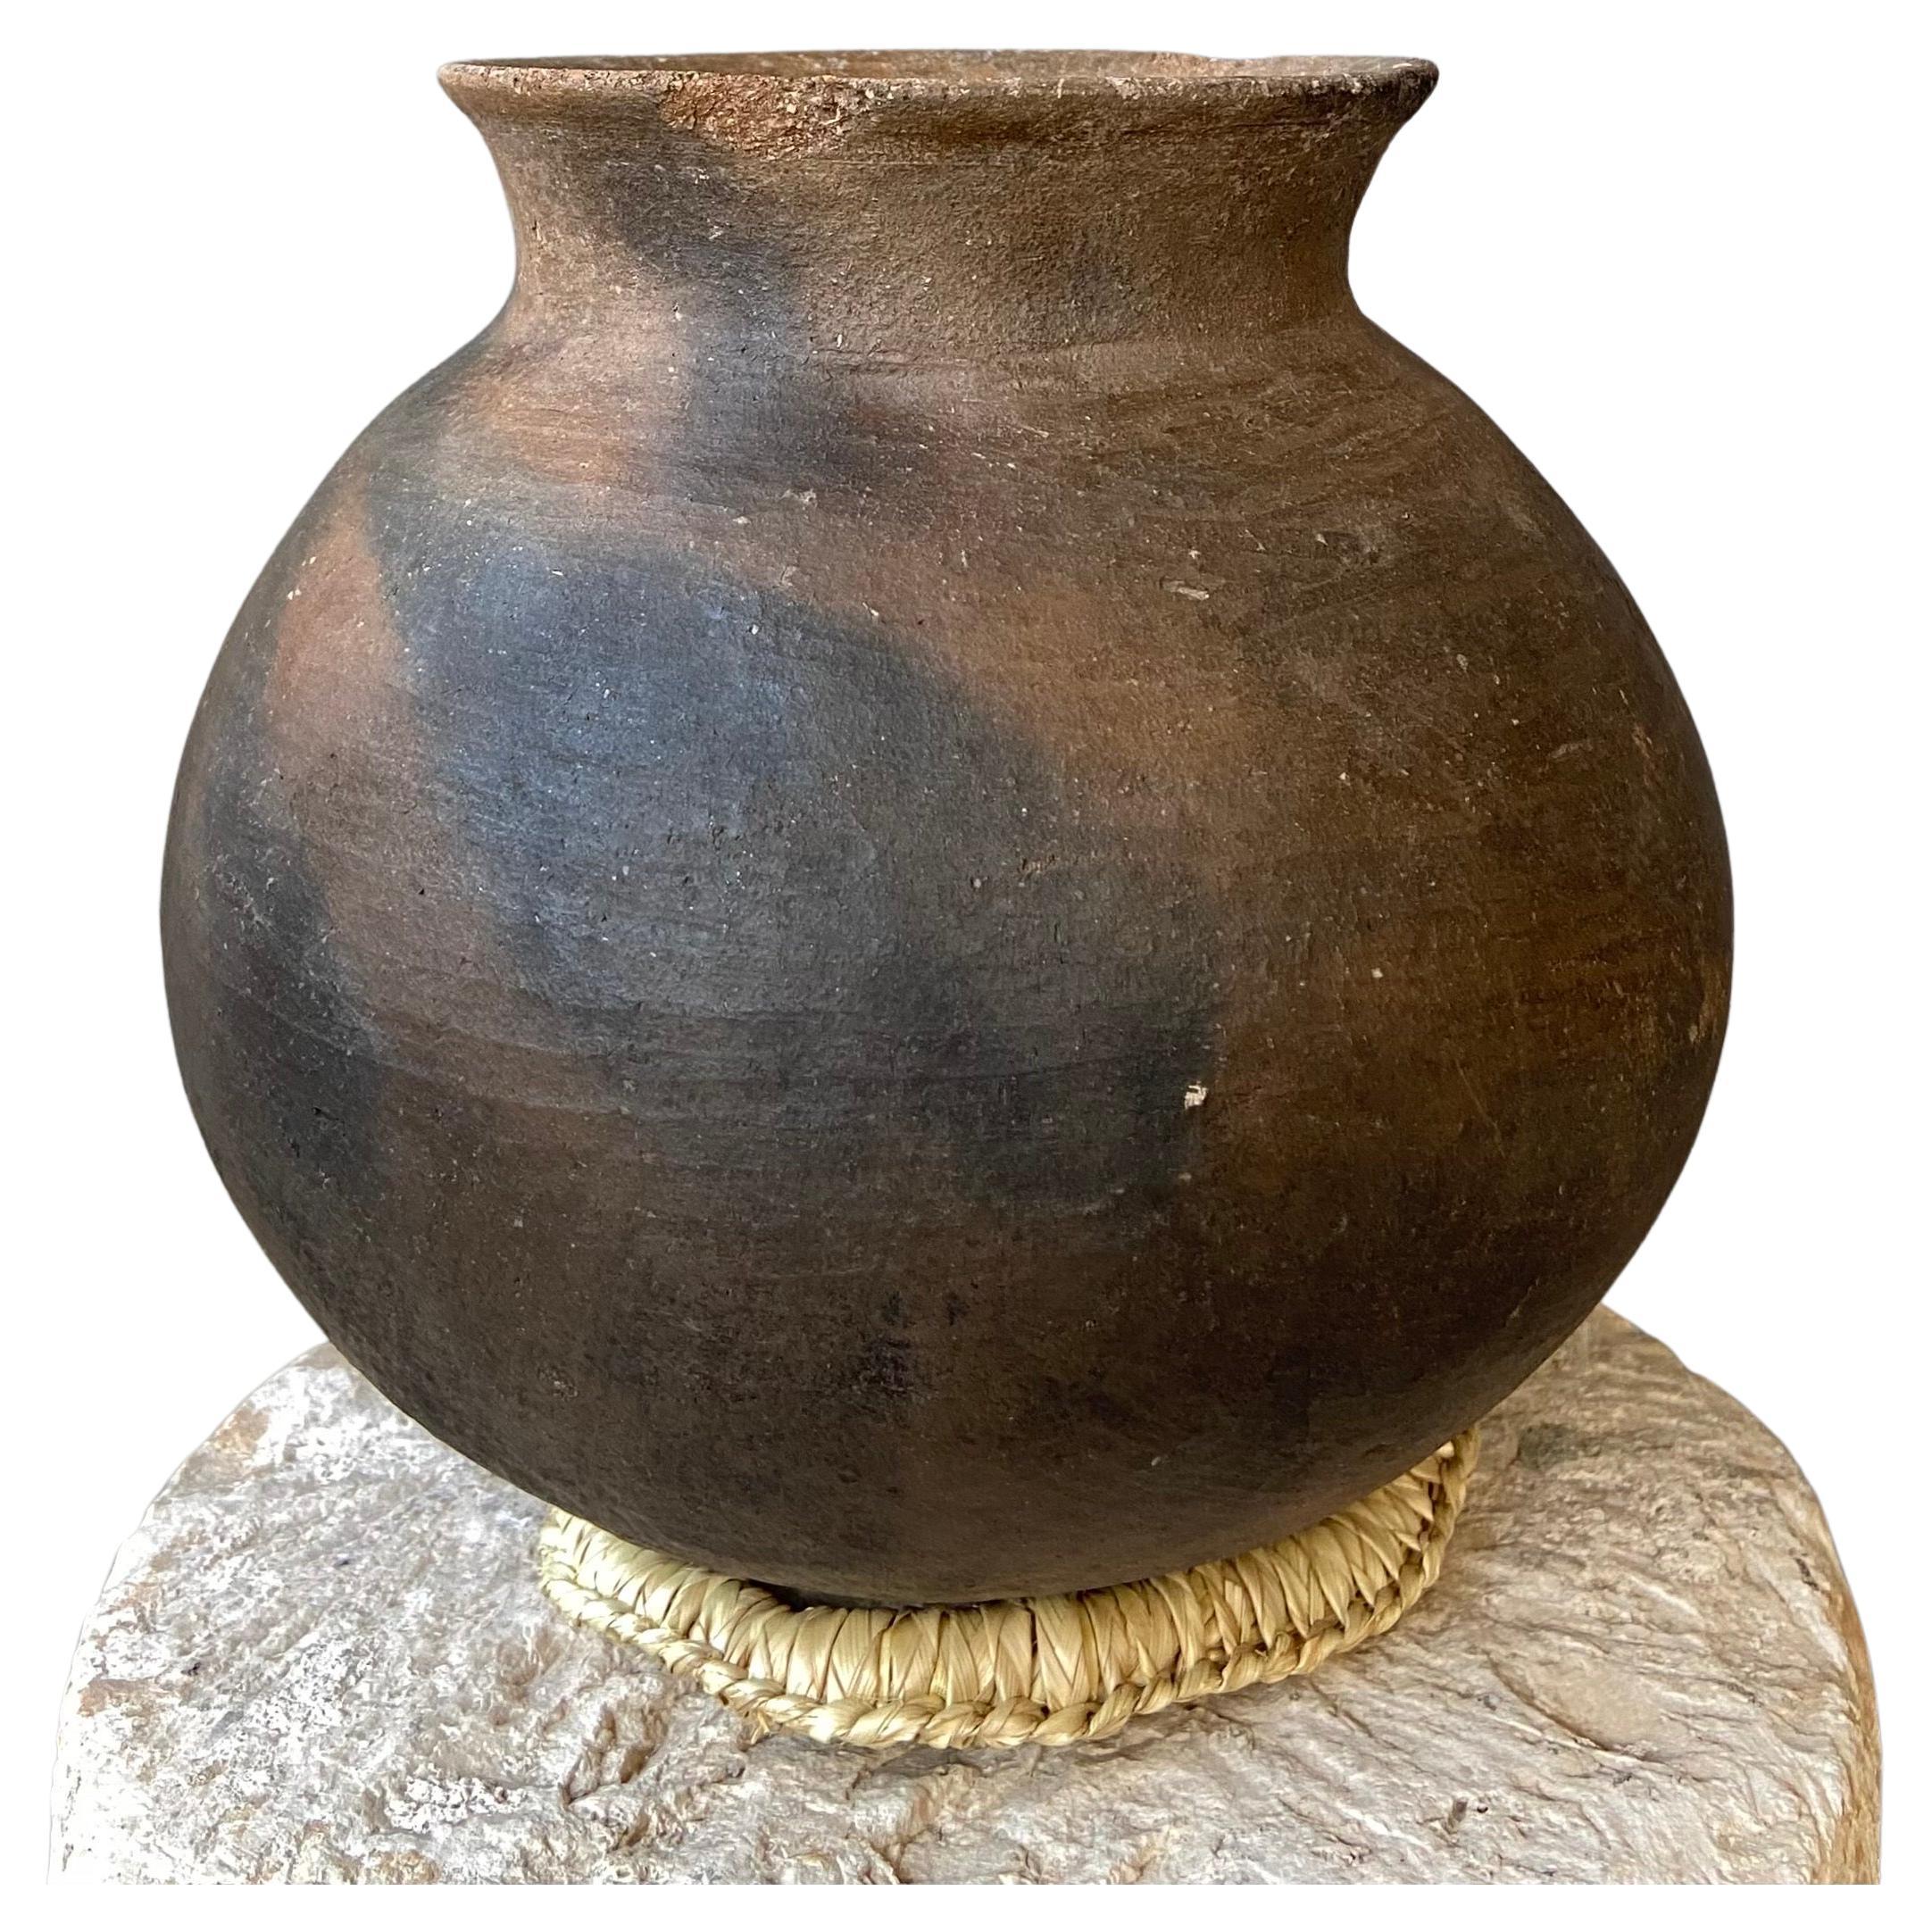 Terracotta Cooking Pot From The Mixteca Region of Oaxaca, Mexico